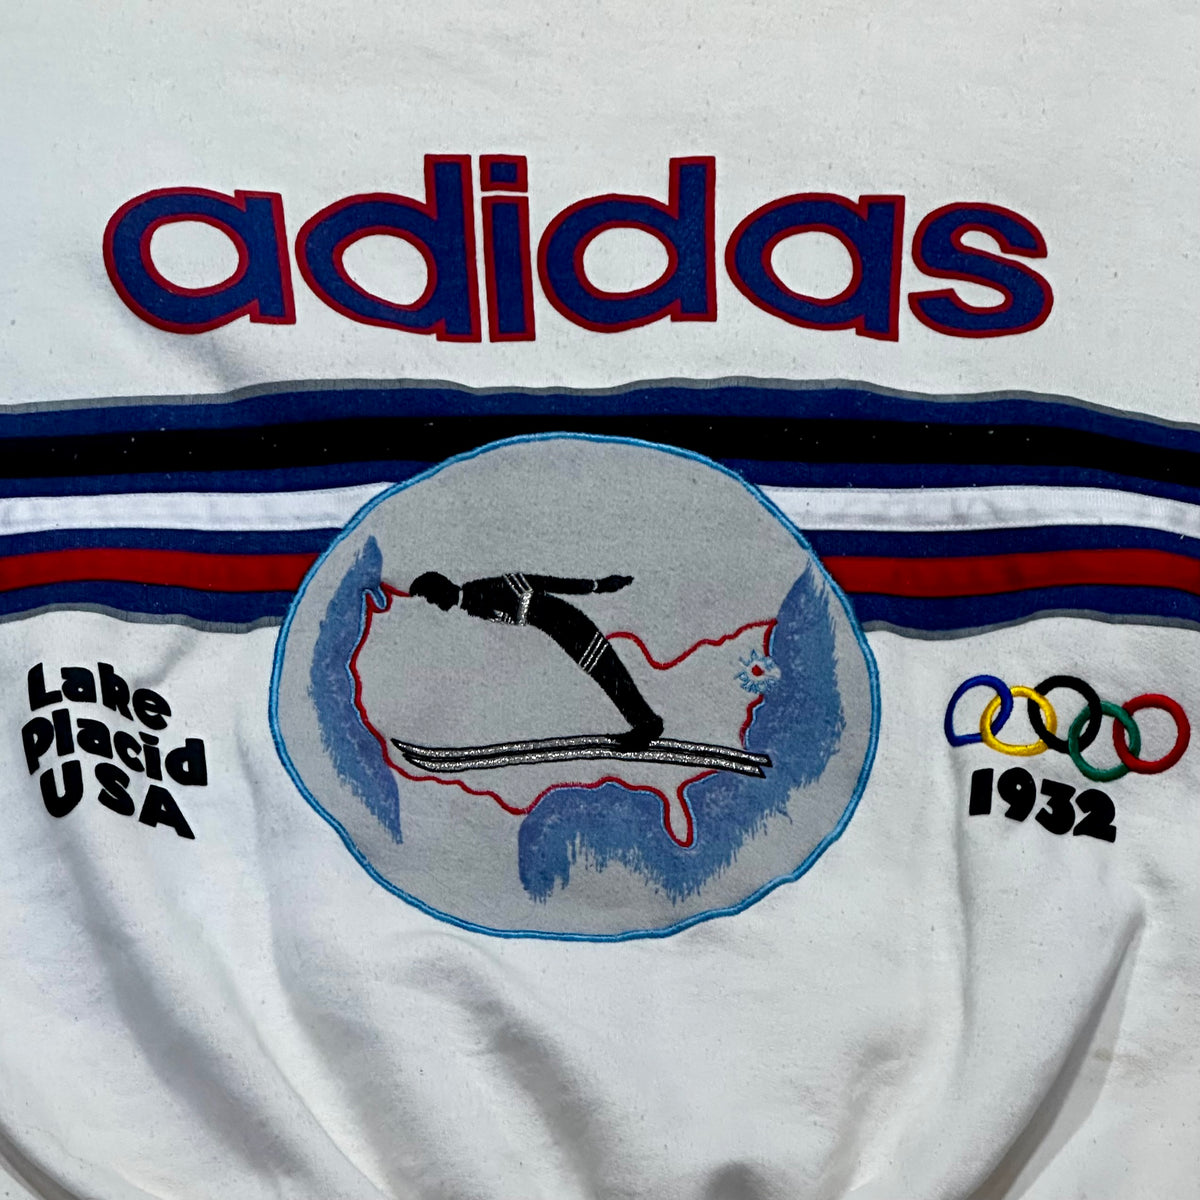 Vintage 80's Adidas Lake Placid Crewneck 1980s Olympic Games Sweatshirt Pullover